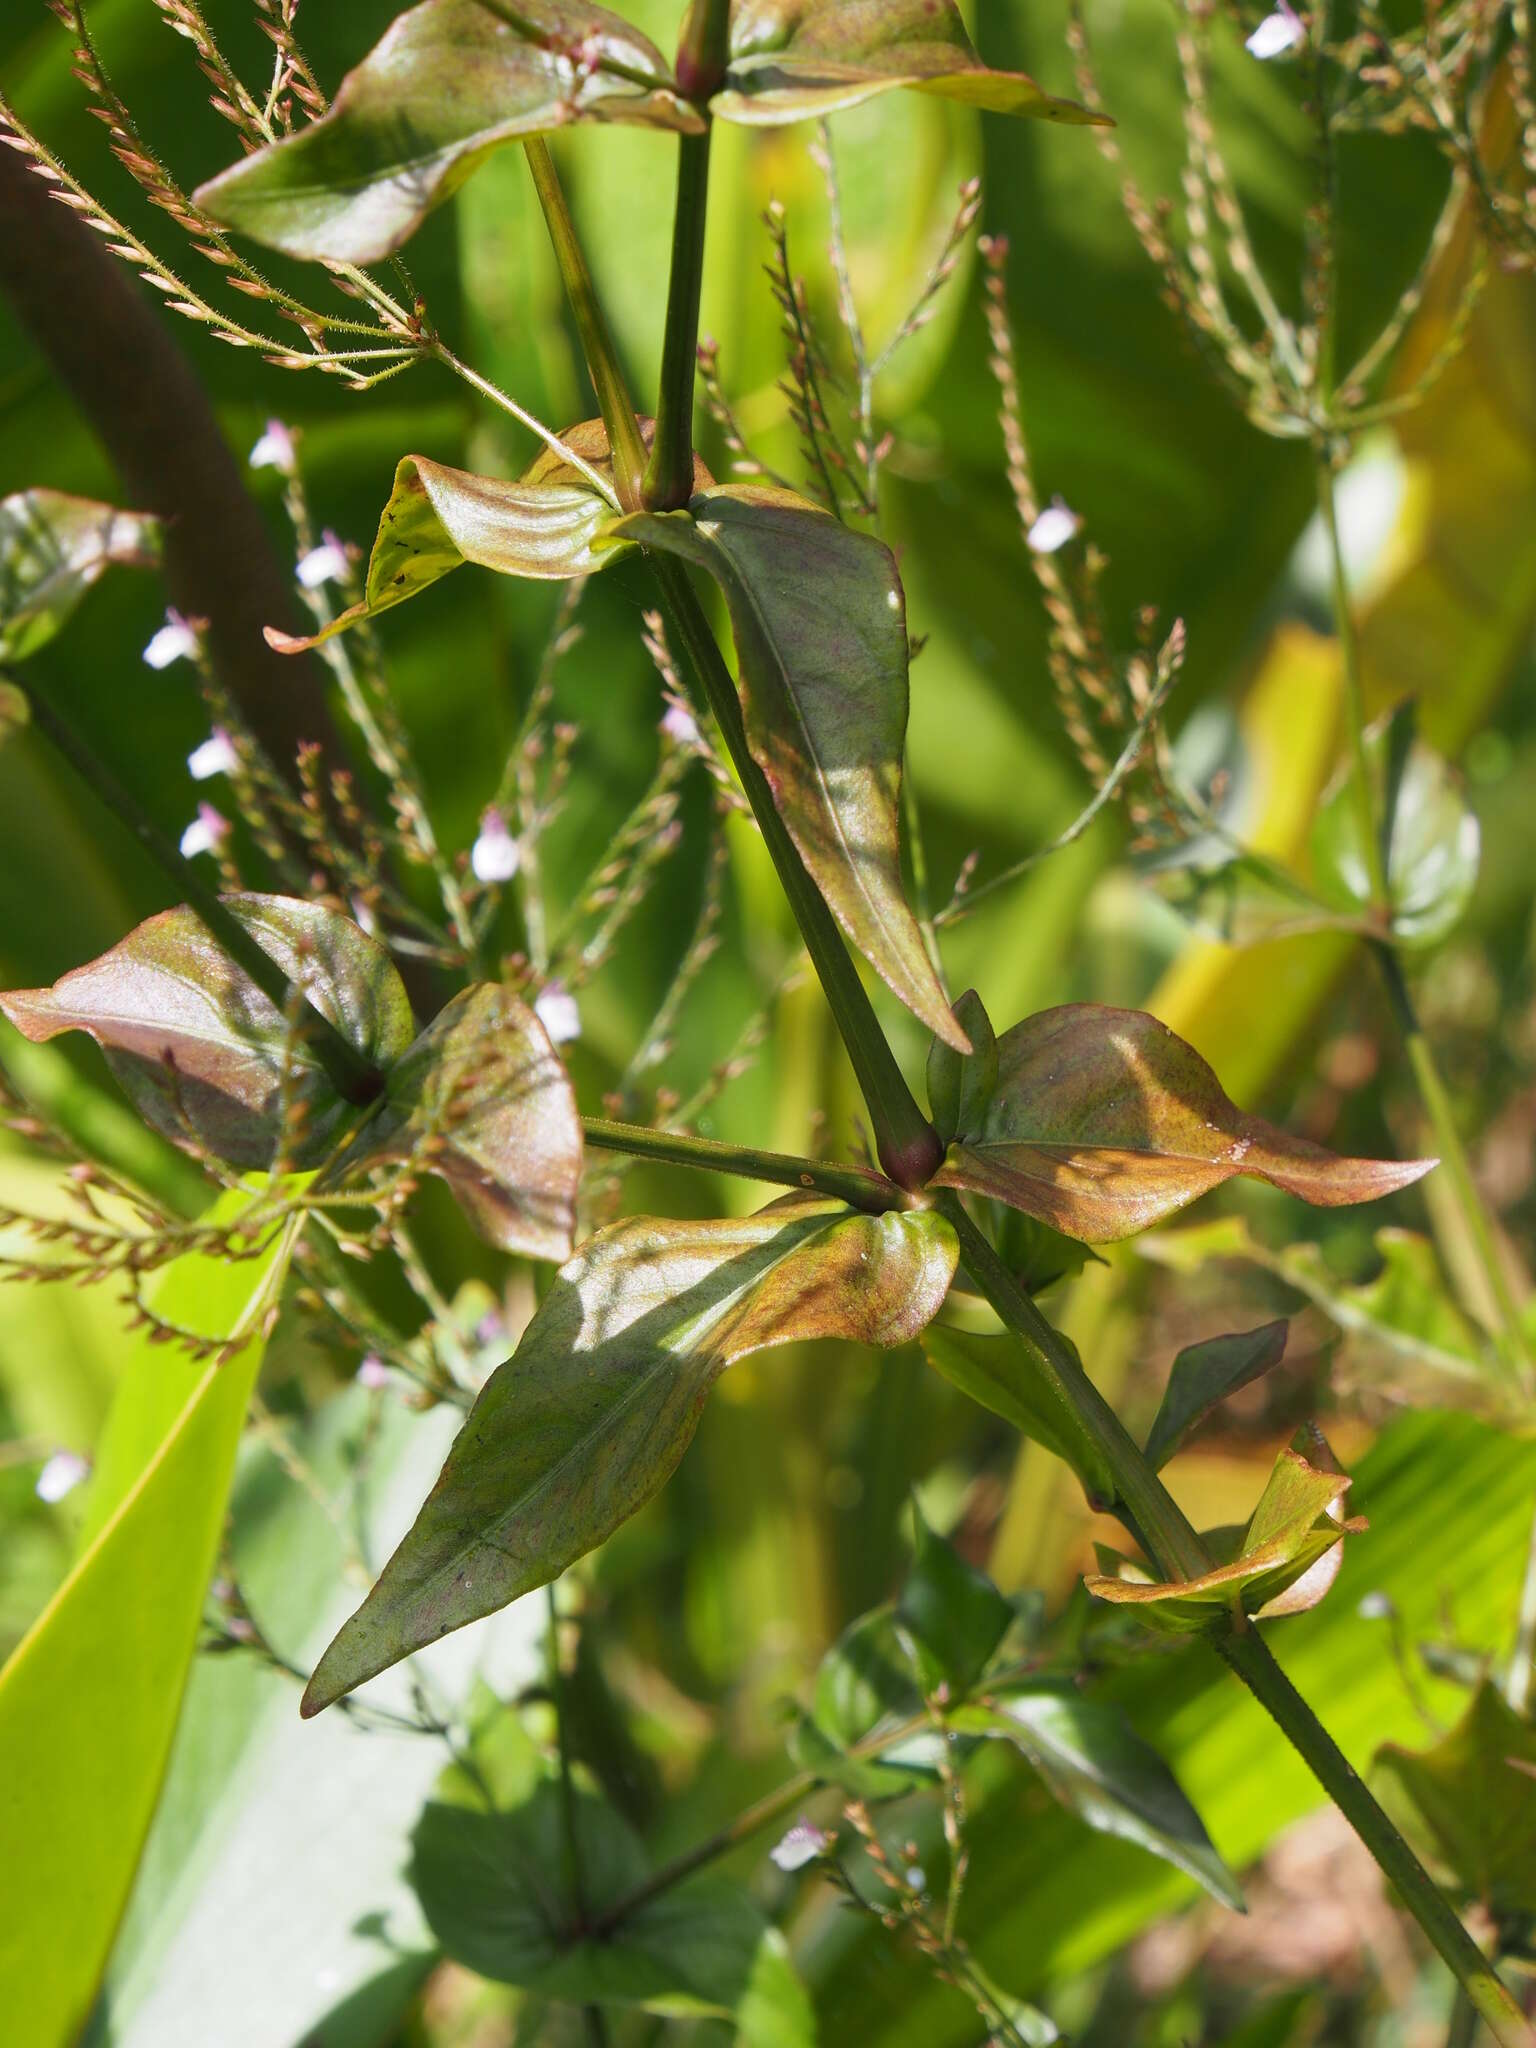 Image of Marsh Water-Willow